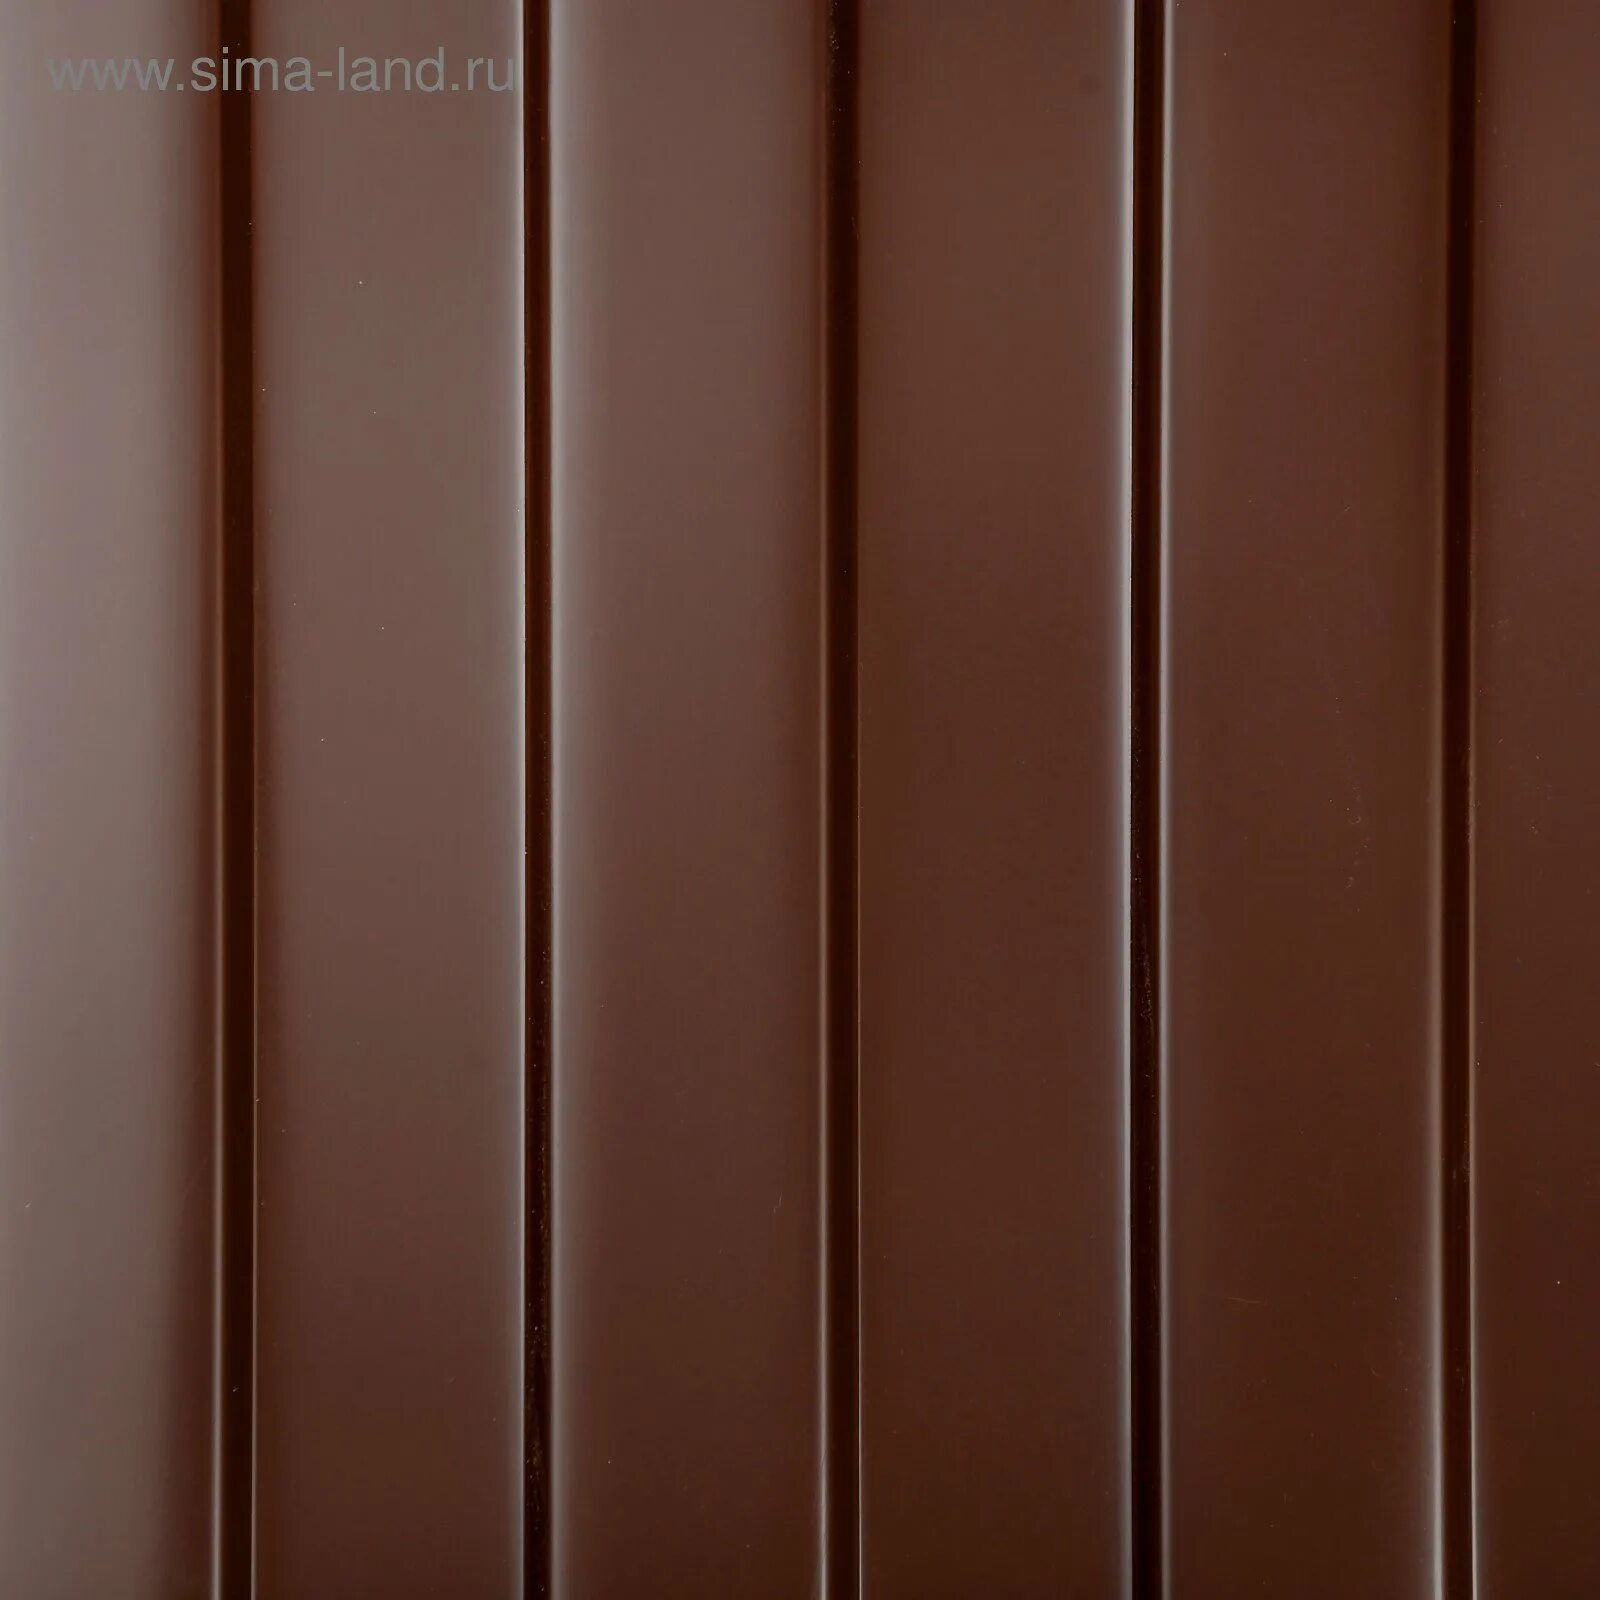 Профнастил коричневый шоколад рал 8017. Профнастил с-8а RAL 8017 2,0х1,20 (темн.корич). Профлист шоколад RAL 8017. Профнастил RAL 8017 коричневый шоколад.